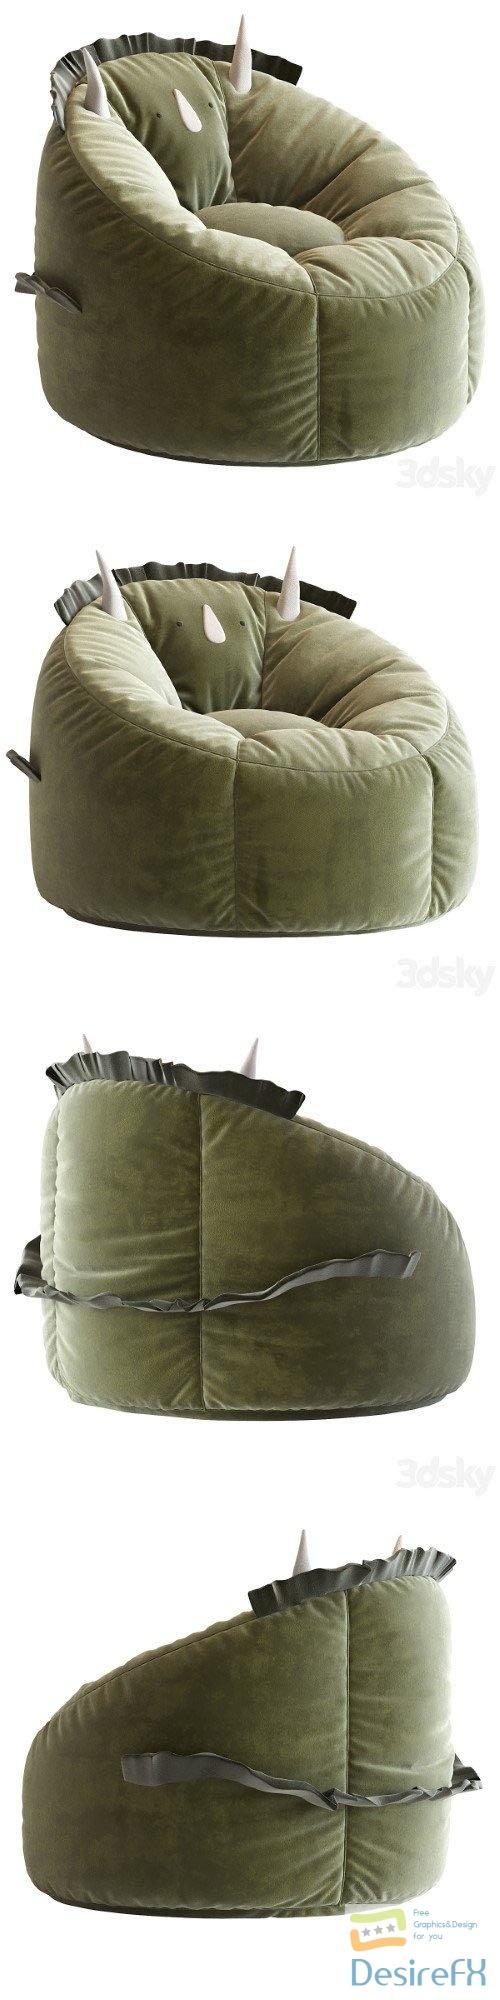 Dinosaur Bean Bag Chair - 3d model